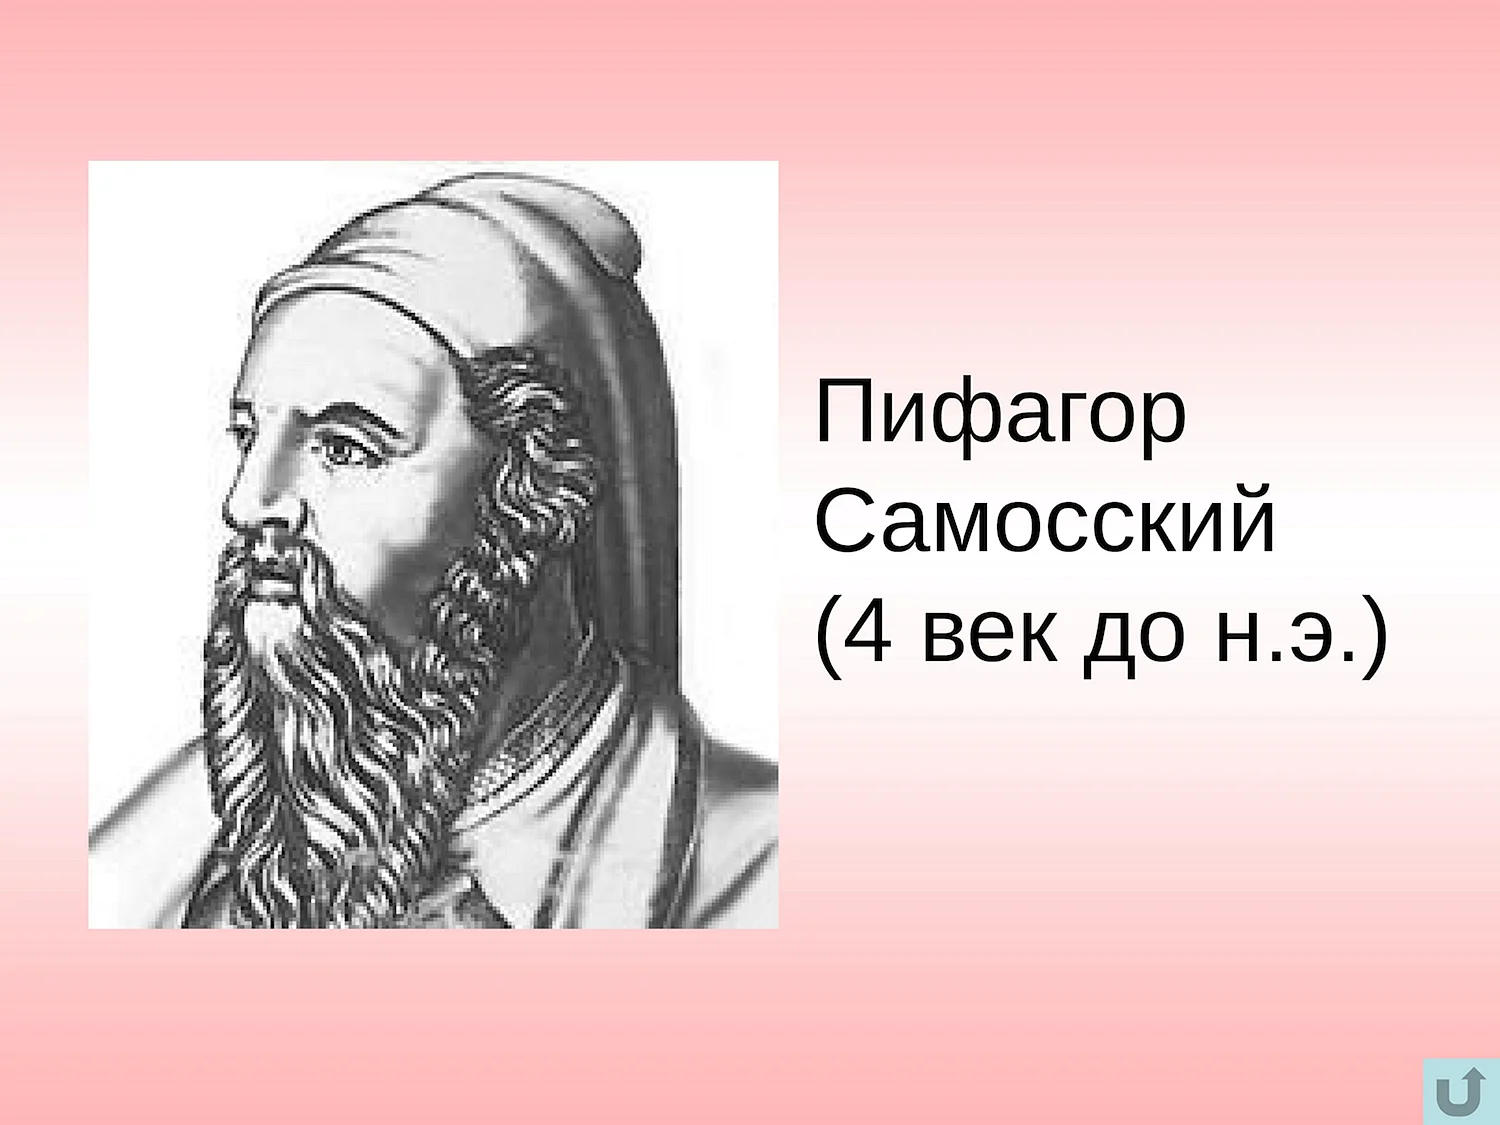 Пифаго́р Са́мосский